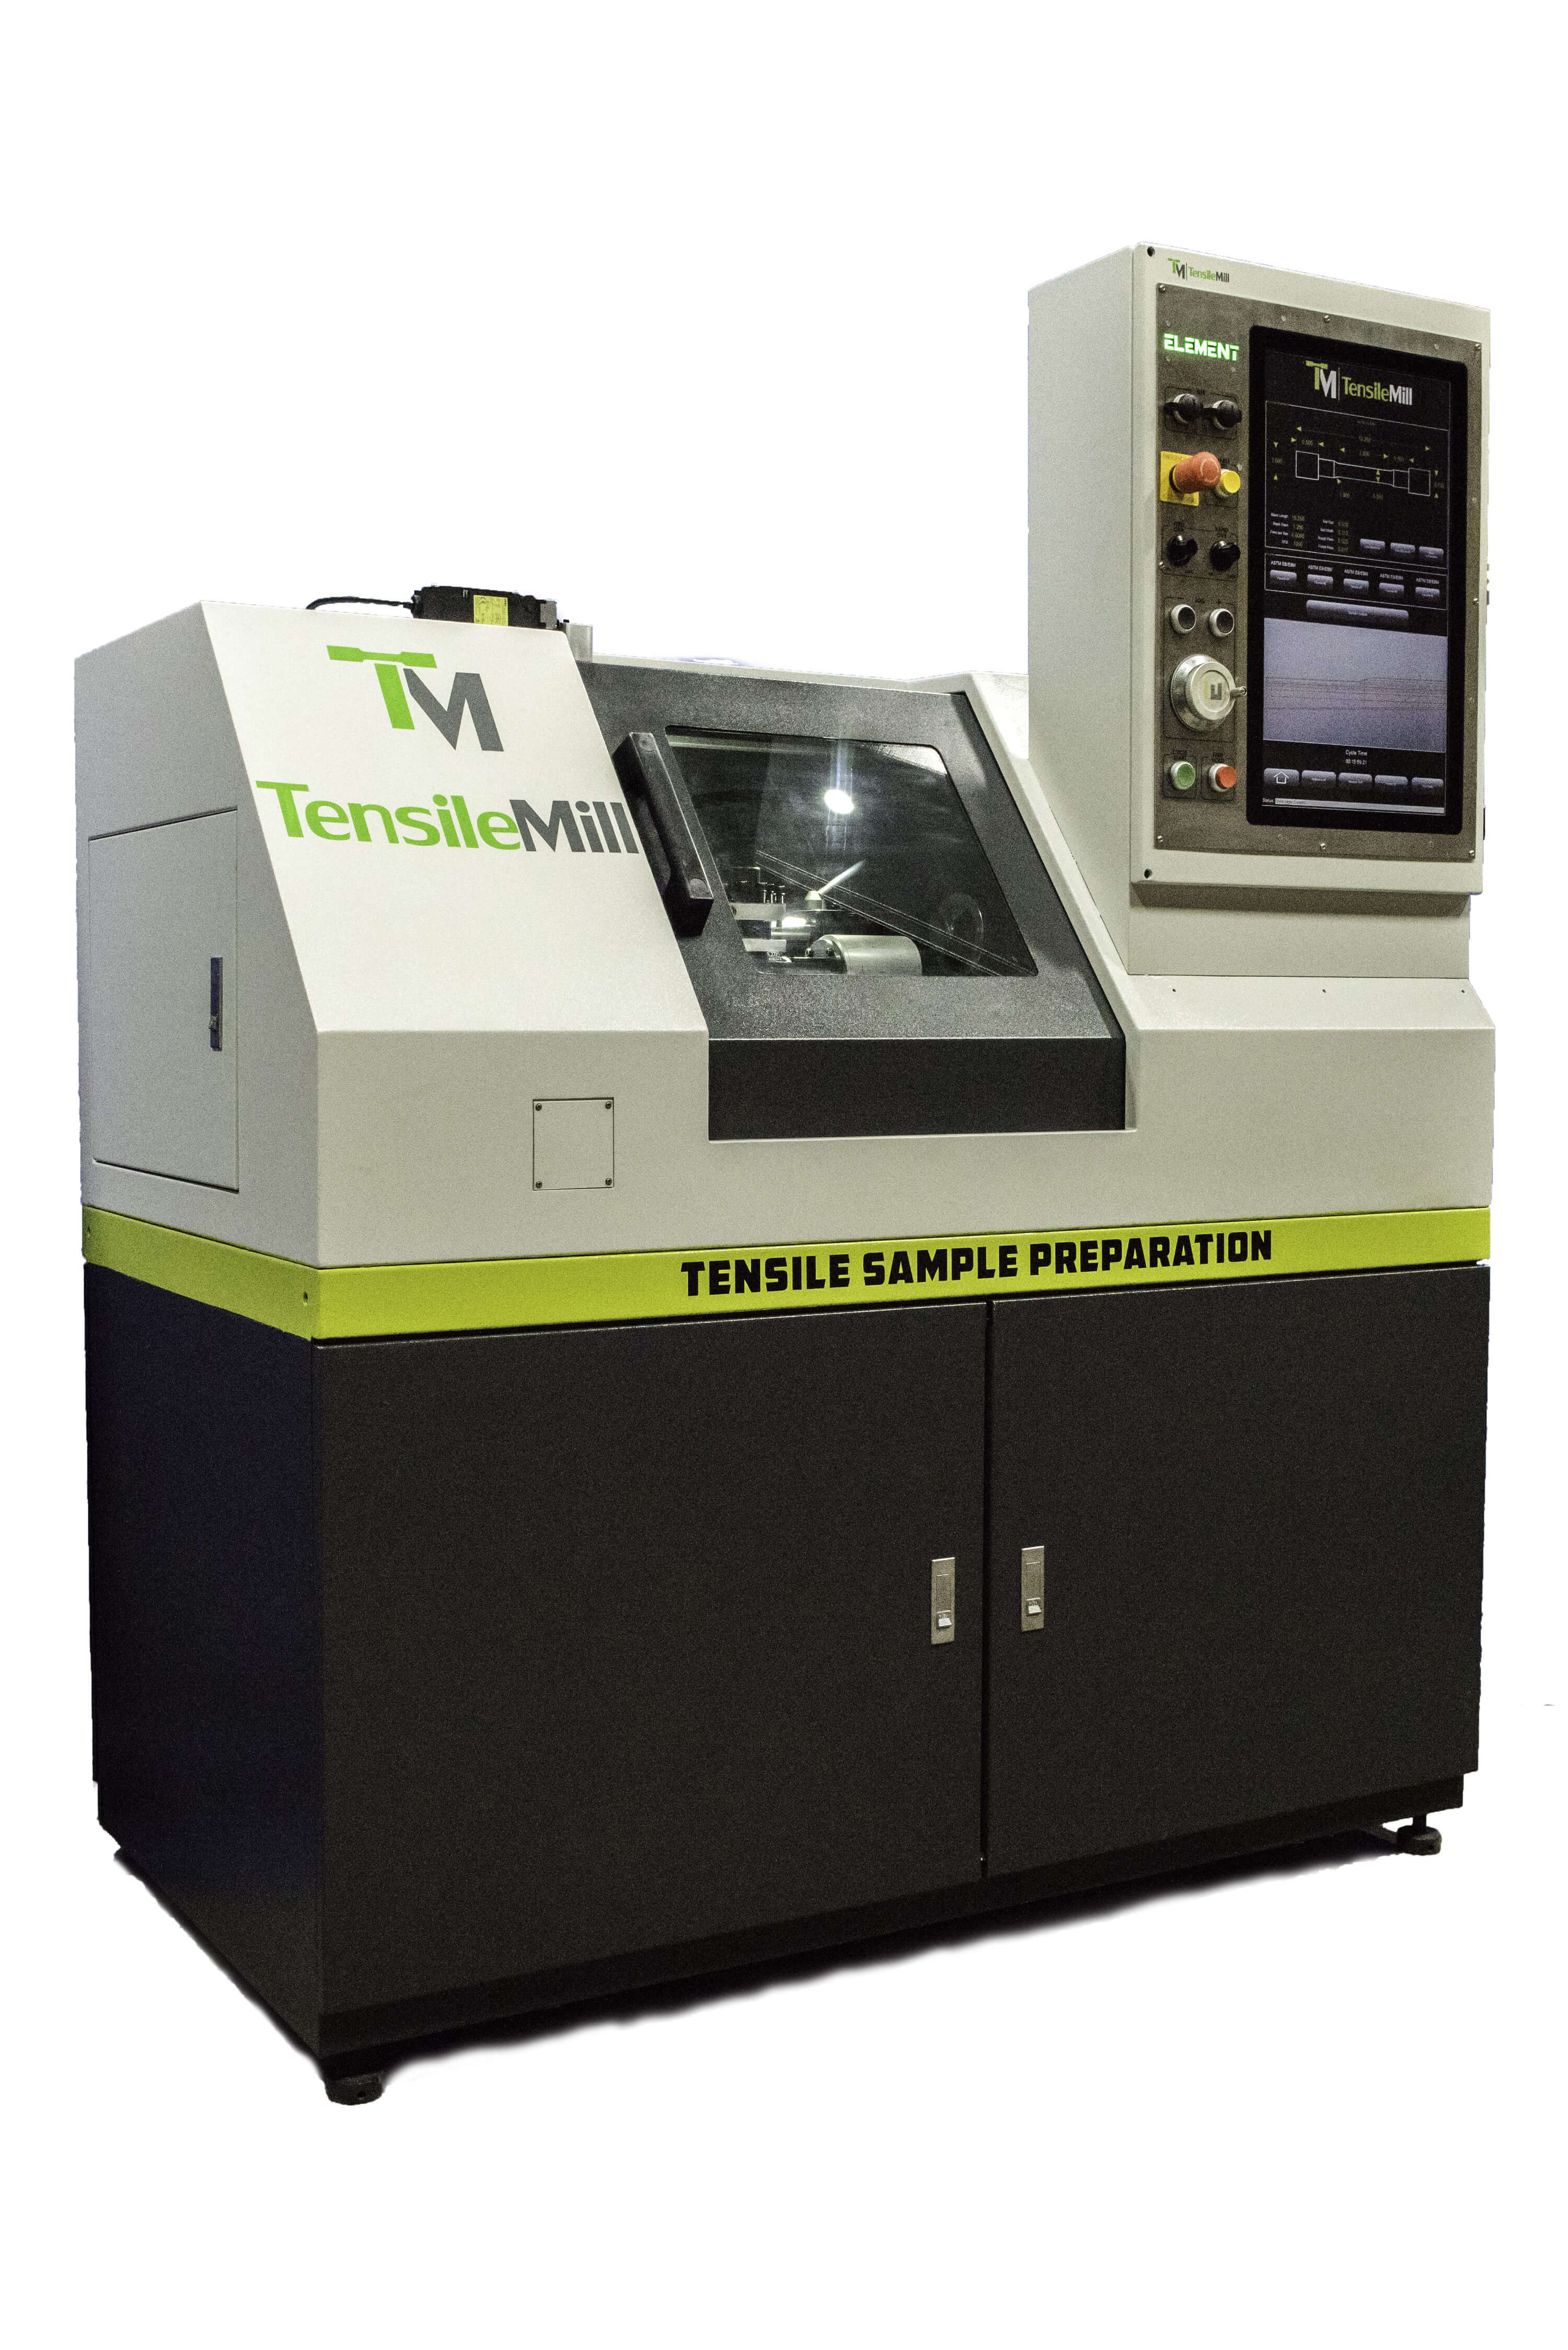 TensileTurn's Tensile Lathe: The Future of Metallographic Quality Control